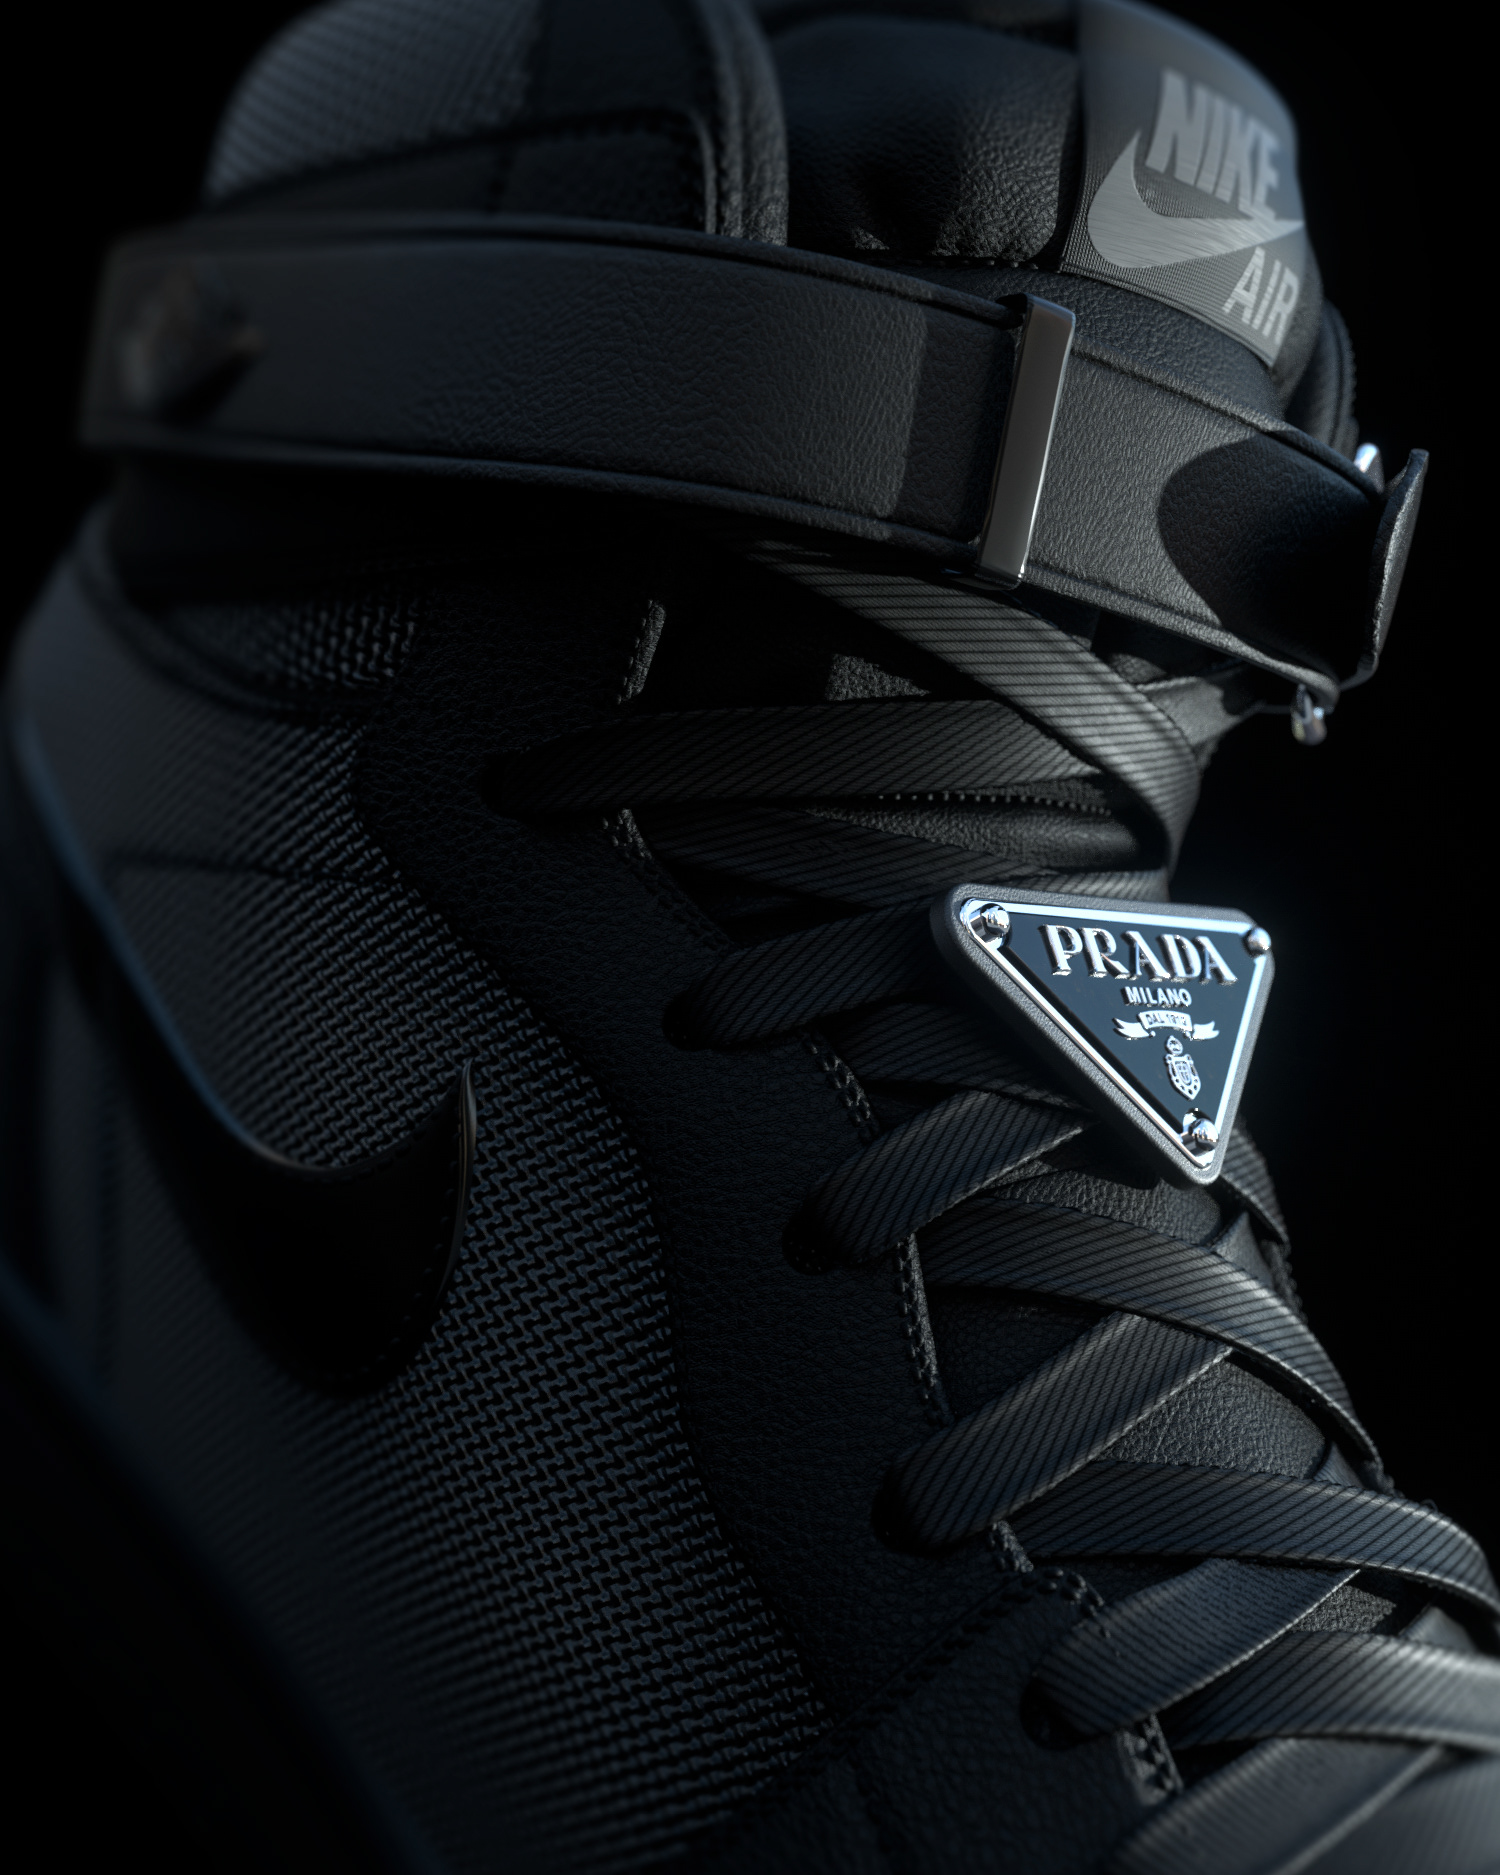 LeRoi3 / Digital Artist - Nike Air Jordan 1 x High End Brands - 3D Concept